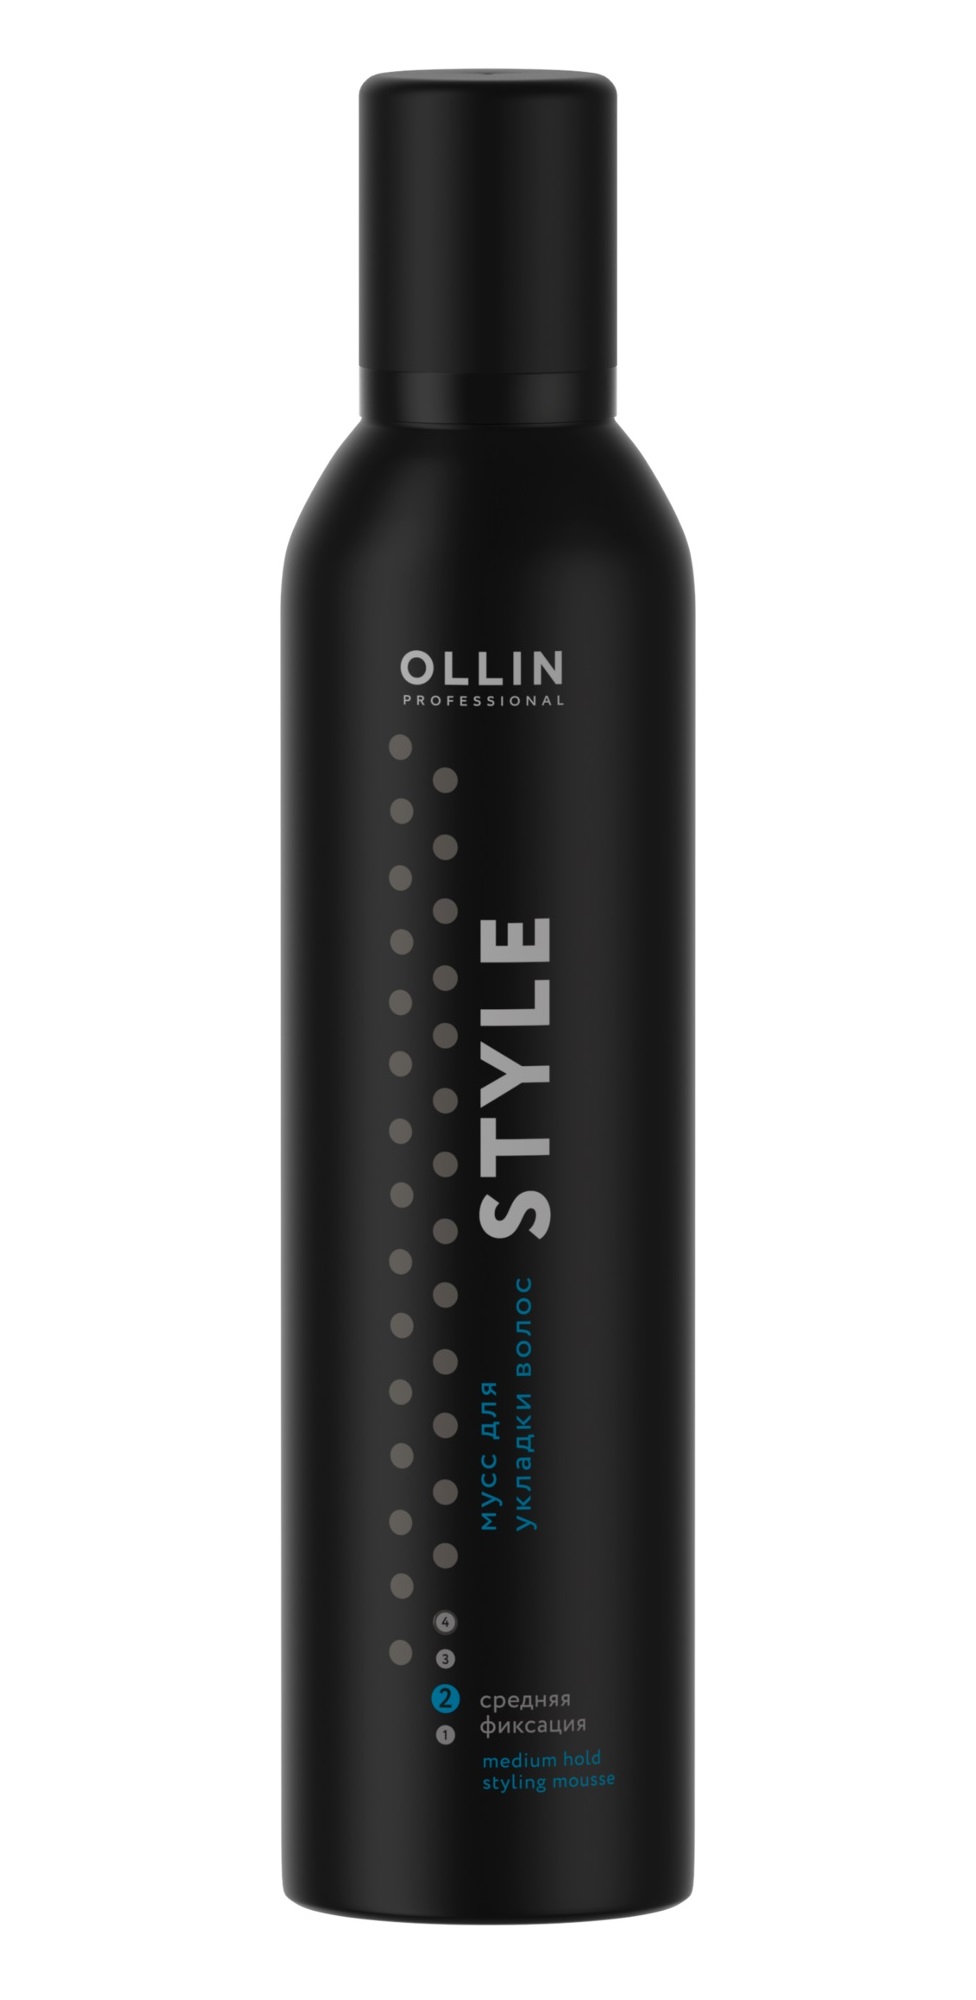 Ollin Professional Мусс для укладки волос средней фиксации, 250 мл (Ollin Professional, Style) лосьон спрей ollin professional style д укладки волос средней фиксации 250 мл